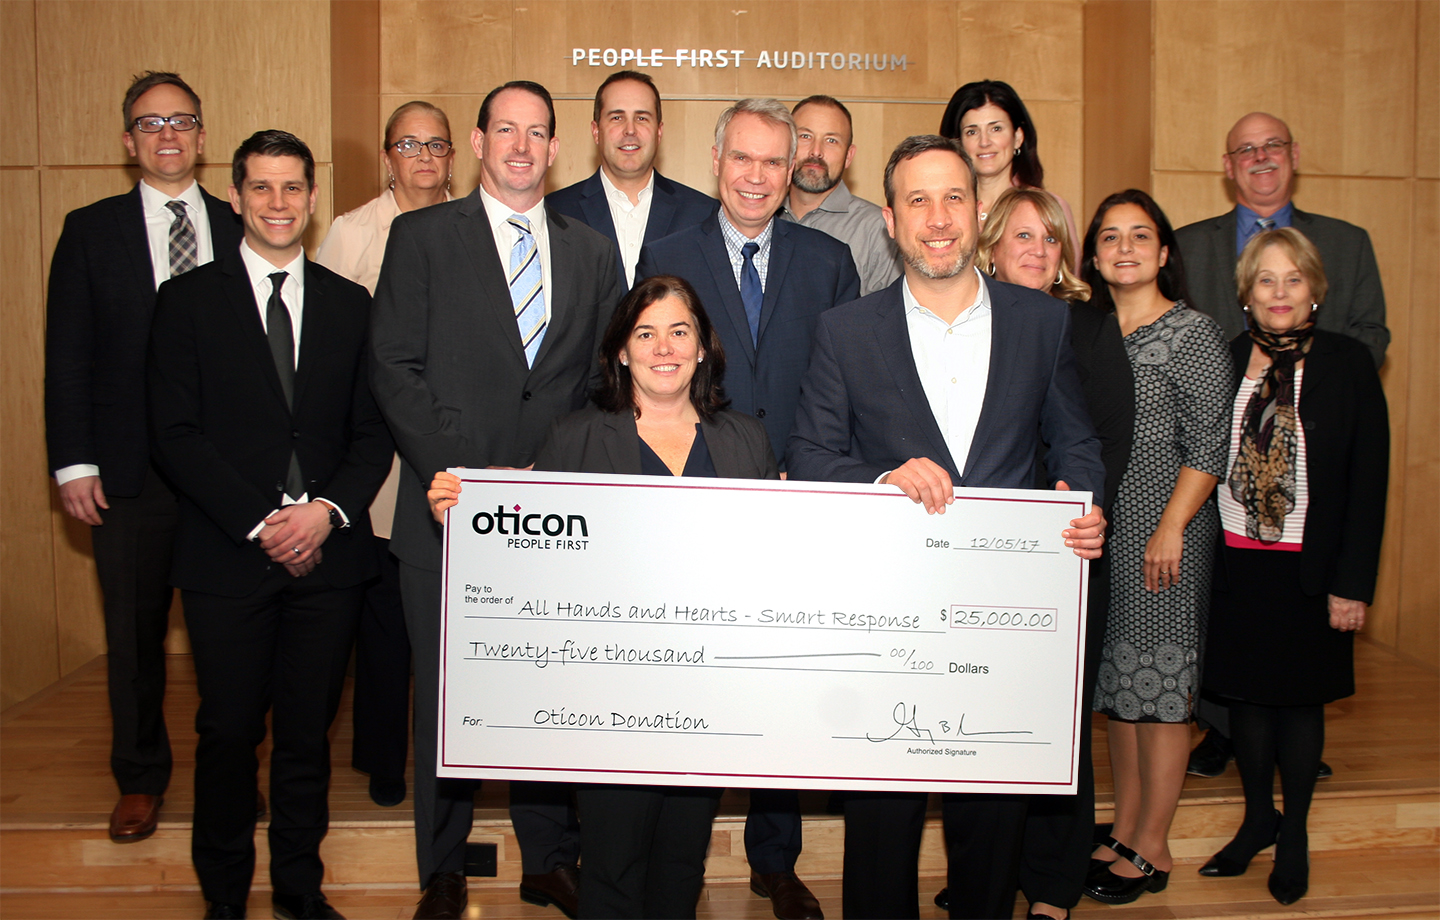 Oticon President Gary Rosenblum presents a check for $25,000 to Sara Hannafin